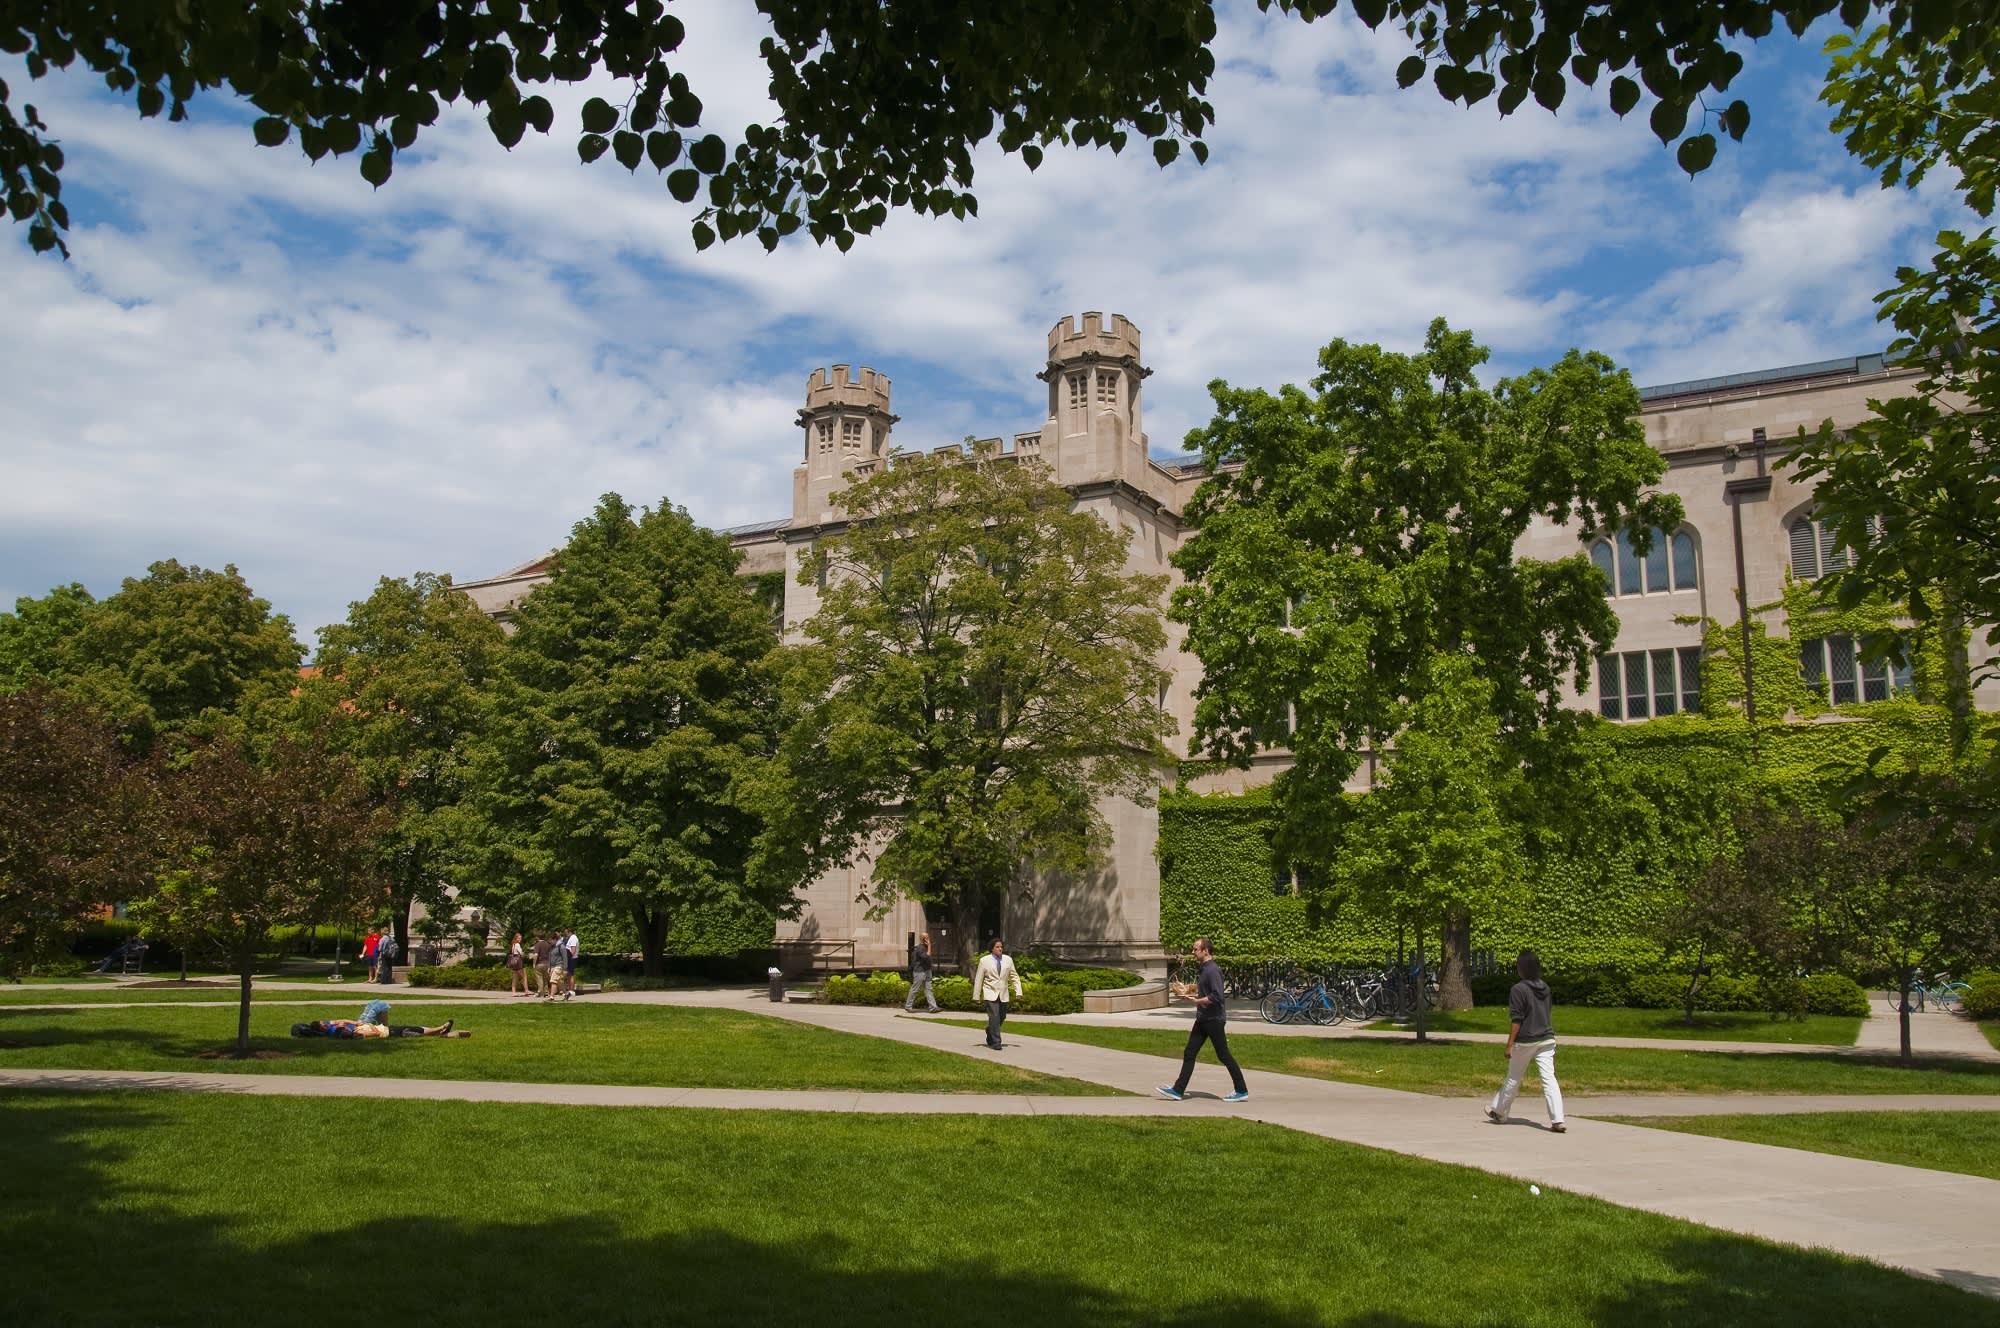 Illinois Tech Ranked Among Nation's Top 100 Universities